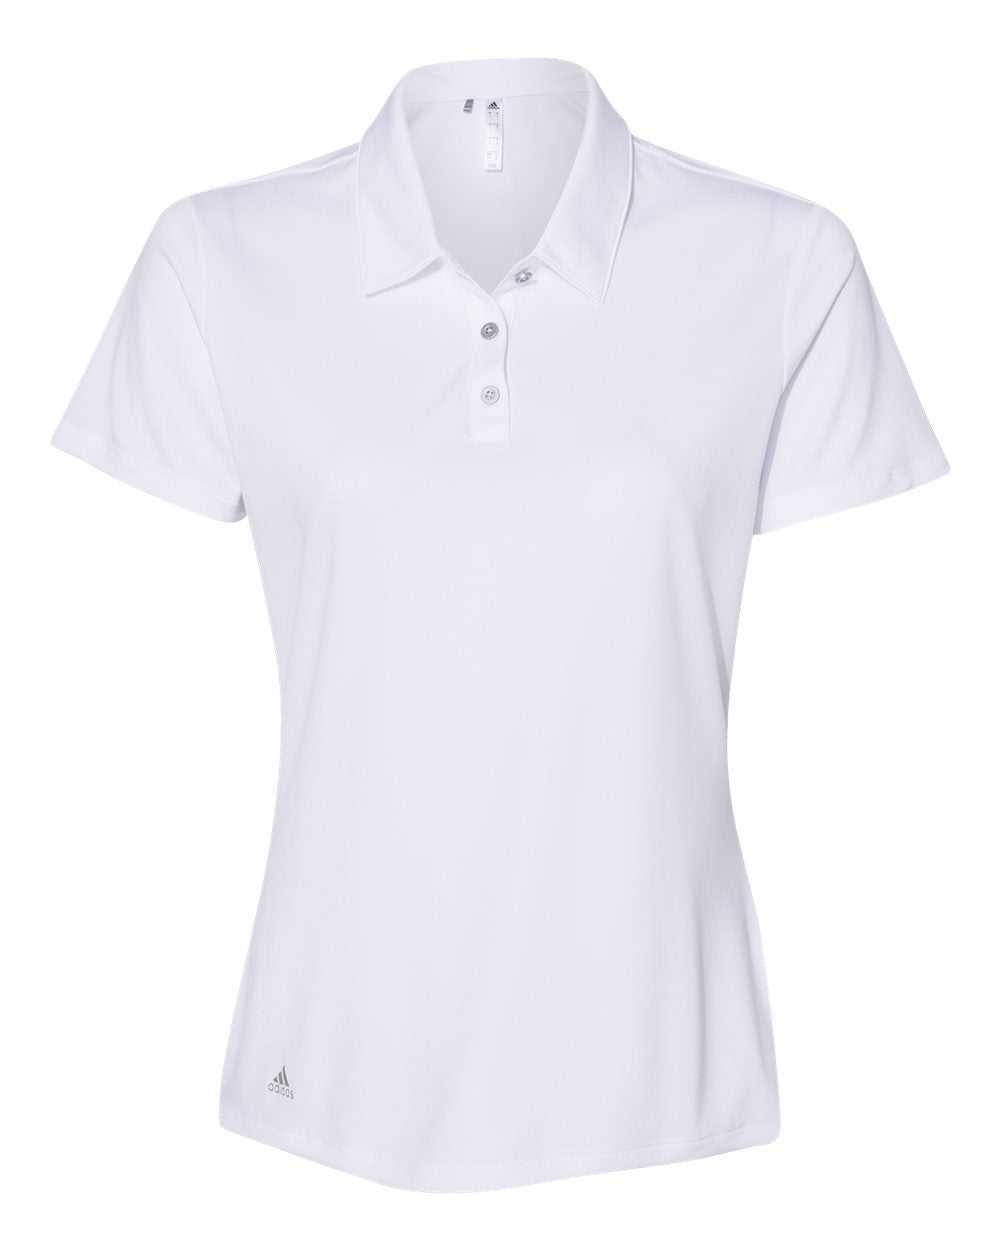 Adidas A231 Women's Performance Sport Shirt - White - HIT a Double